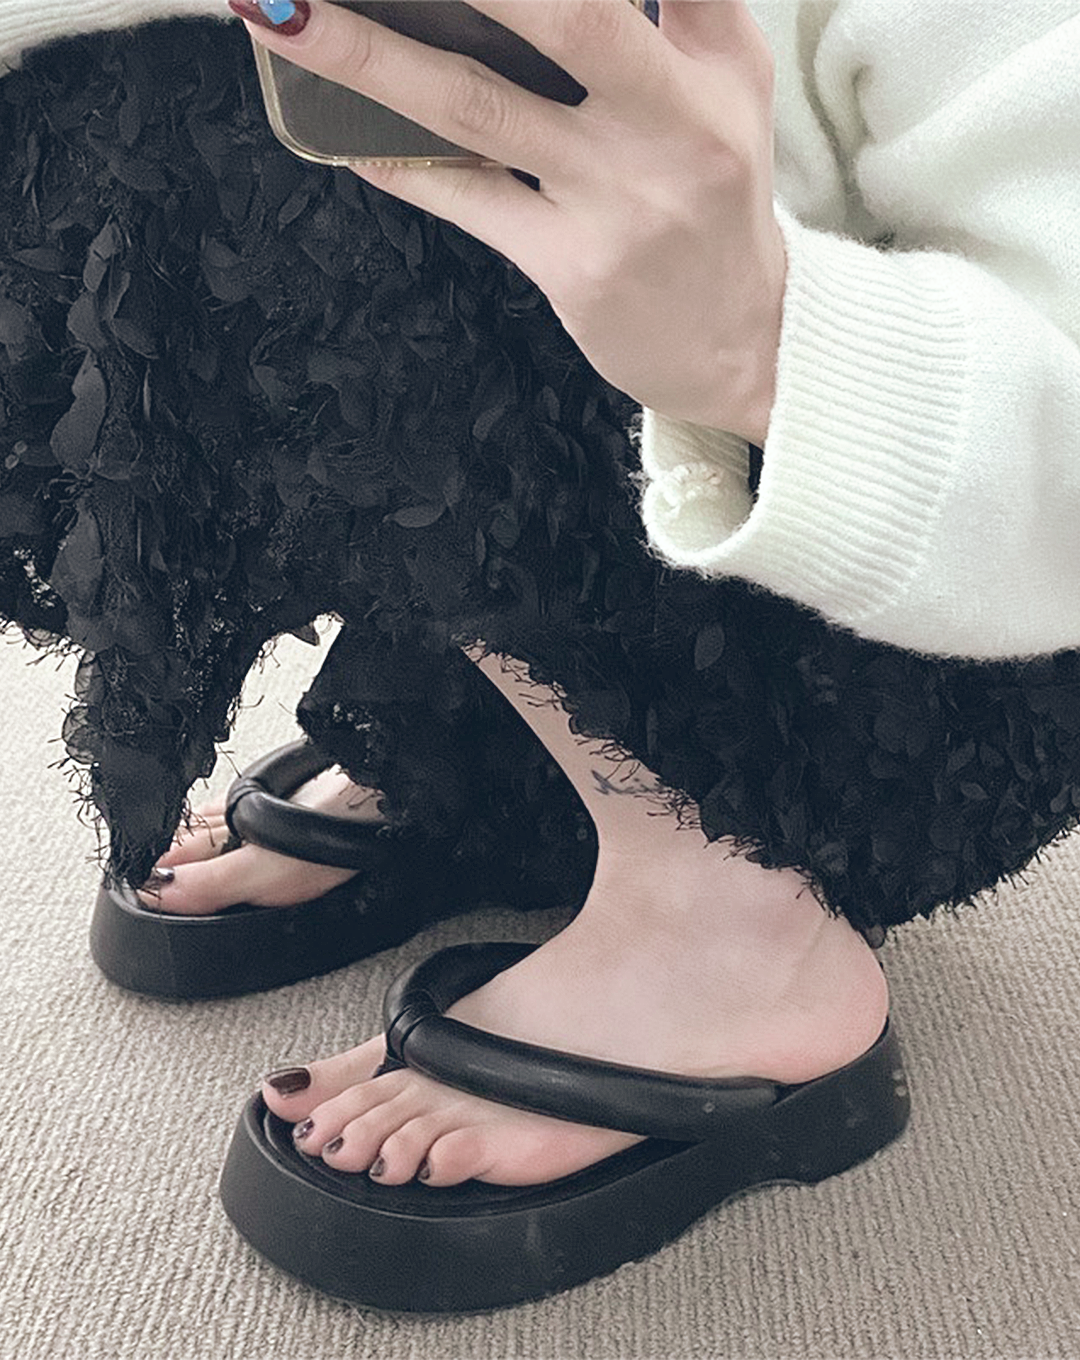 ♀Platform Thong Sandals